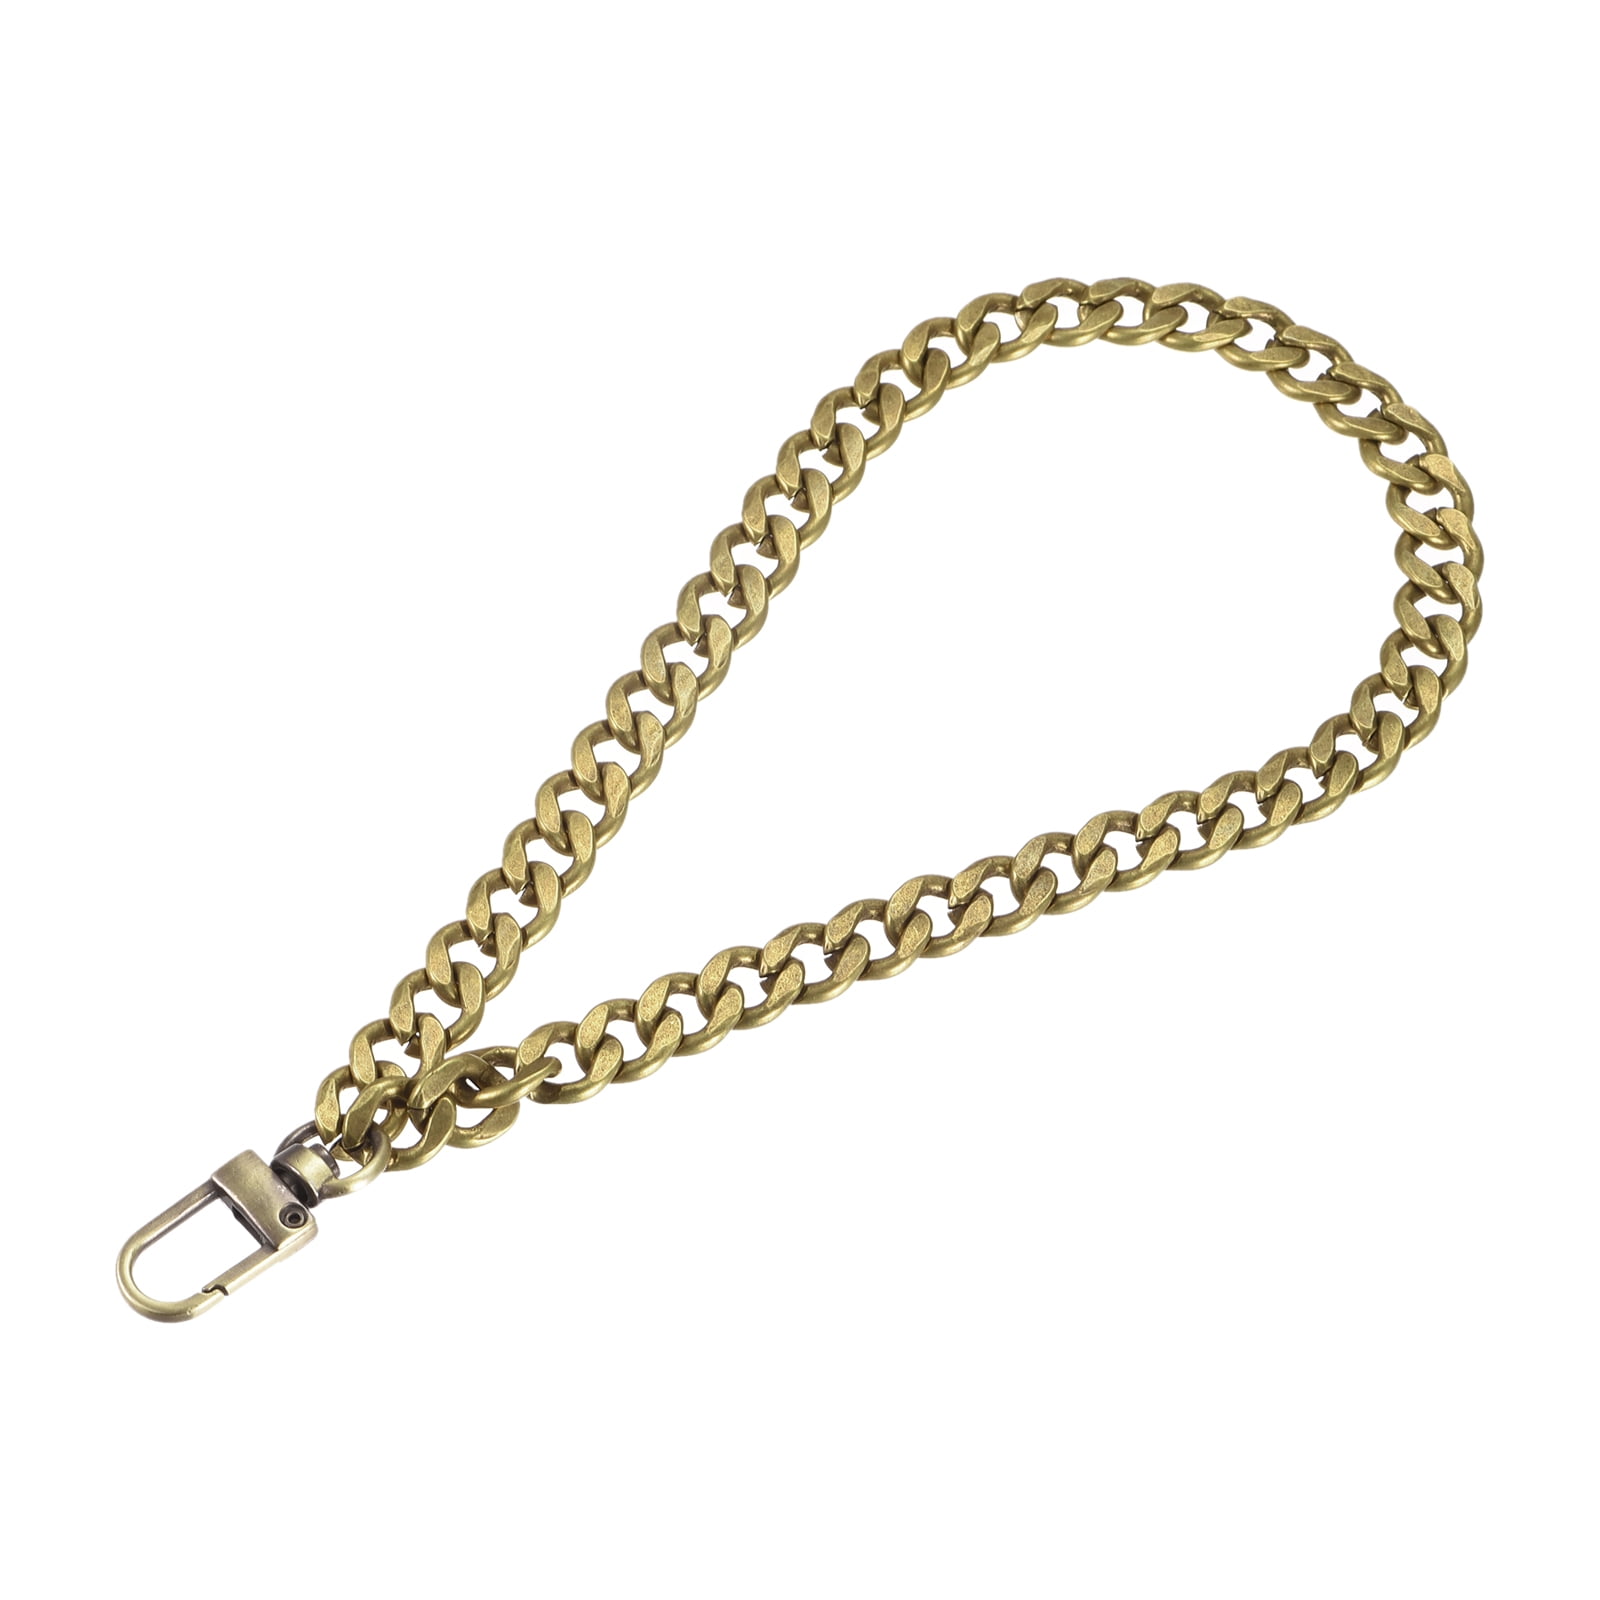 women for car keys chains，car keychains rings holder lanyard bracelets  accessories wristlet cover shell letter holder strap